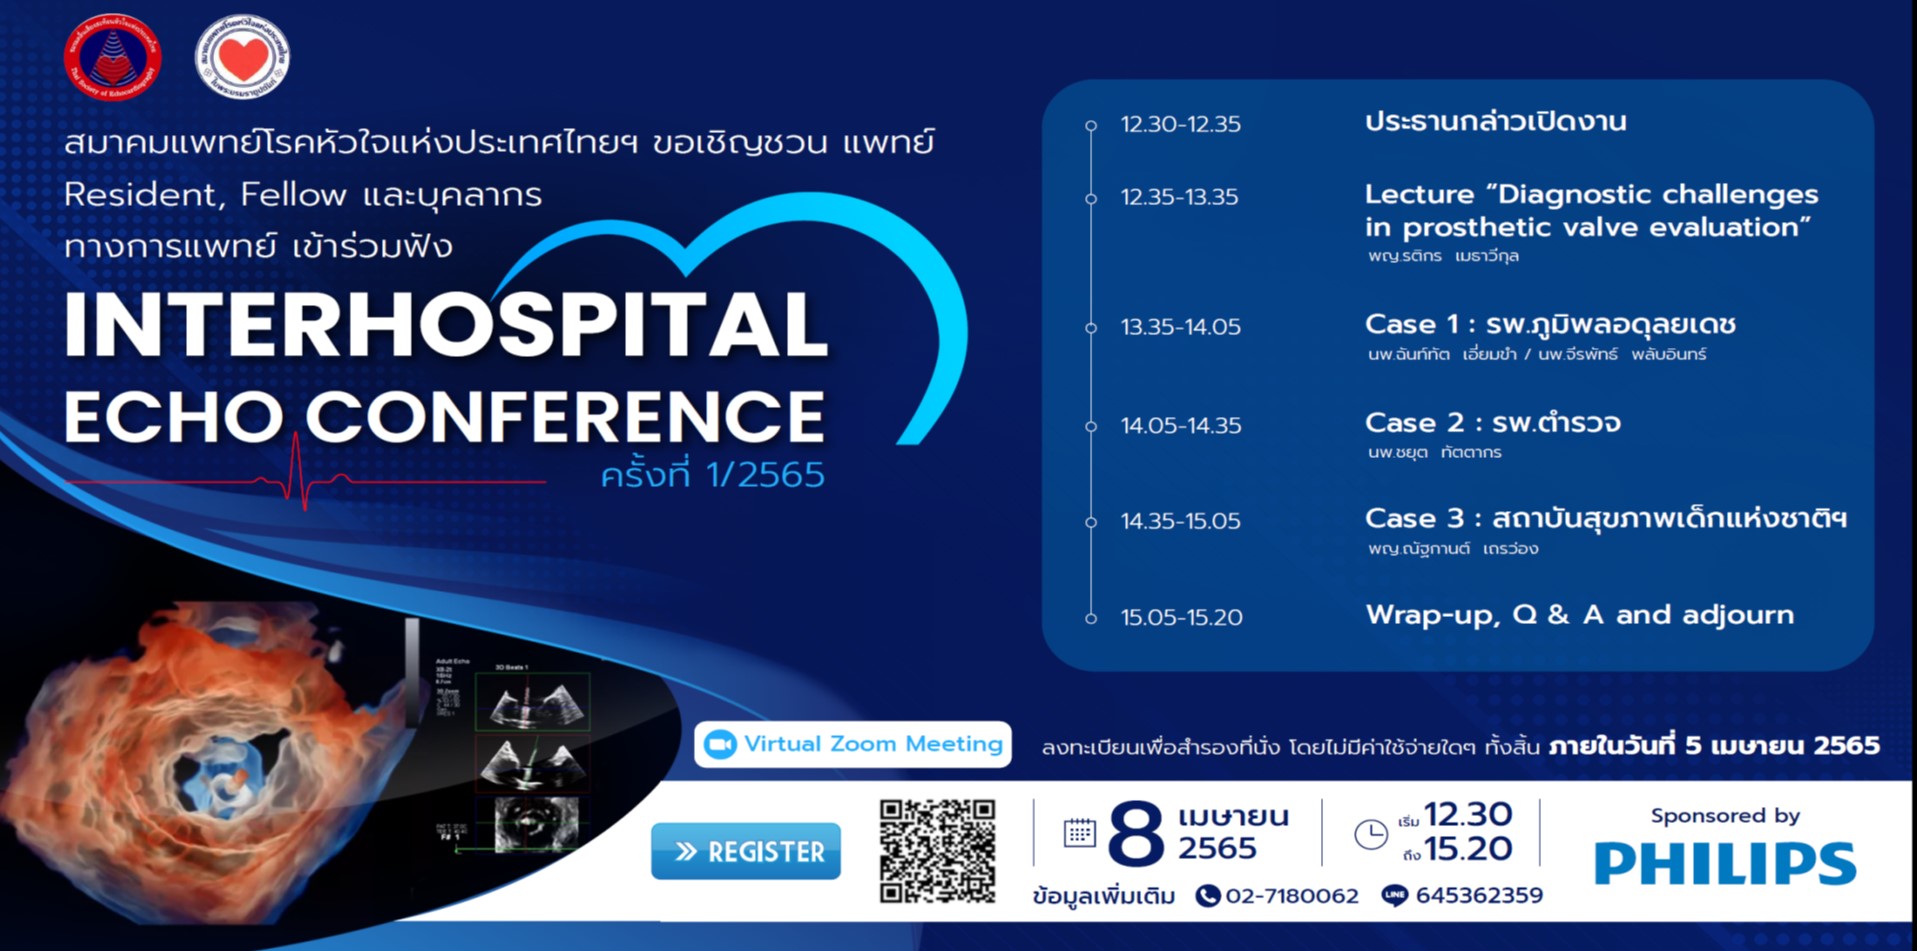 Interhospital echo conference Thai Society of Echocardiography